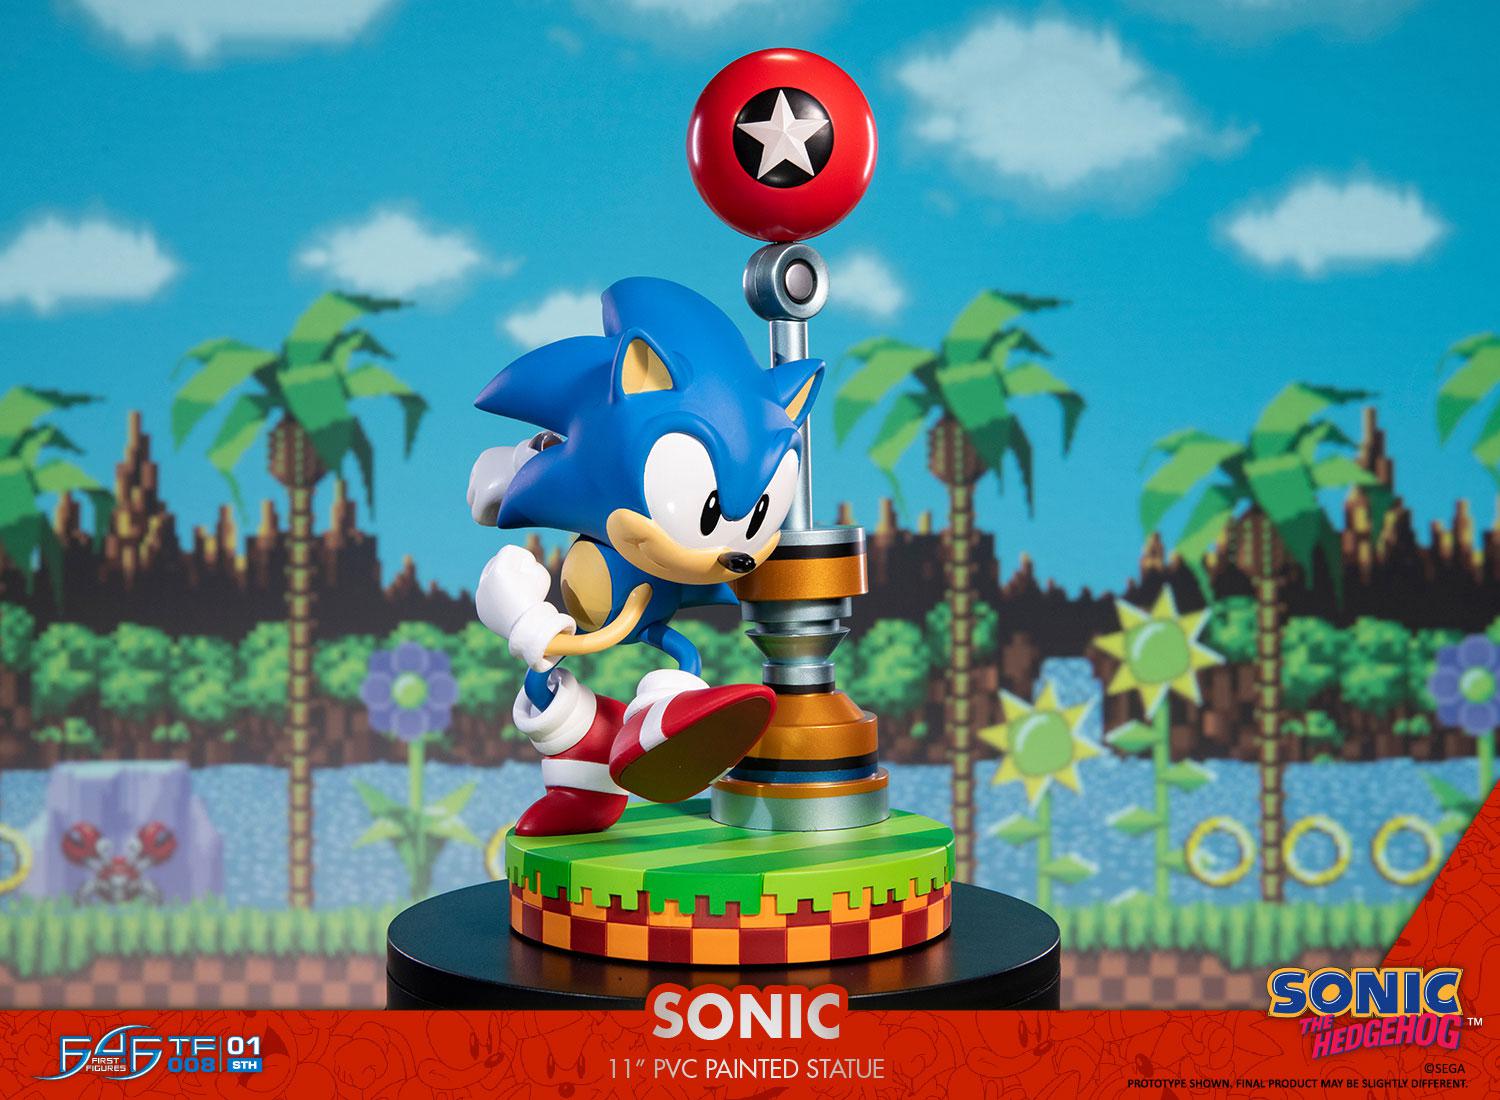 F4F Sonic the Hedgehog: Sonic 11" PVC (SE)